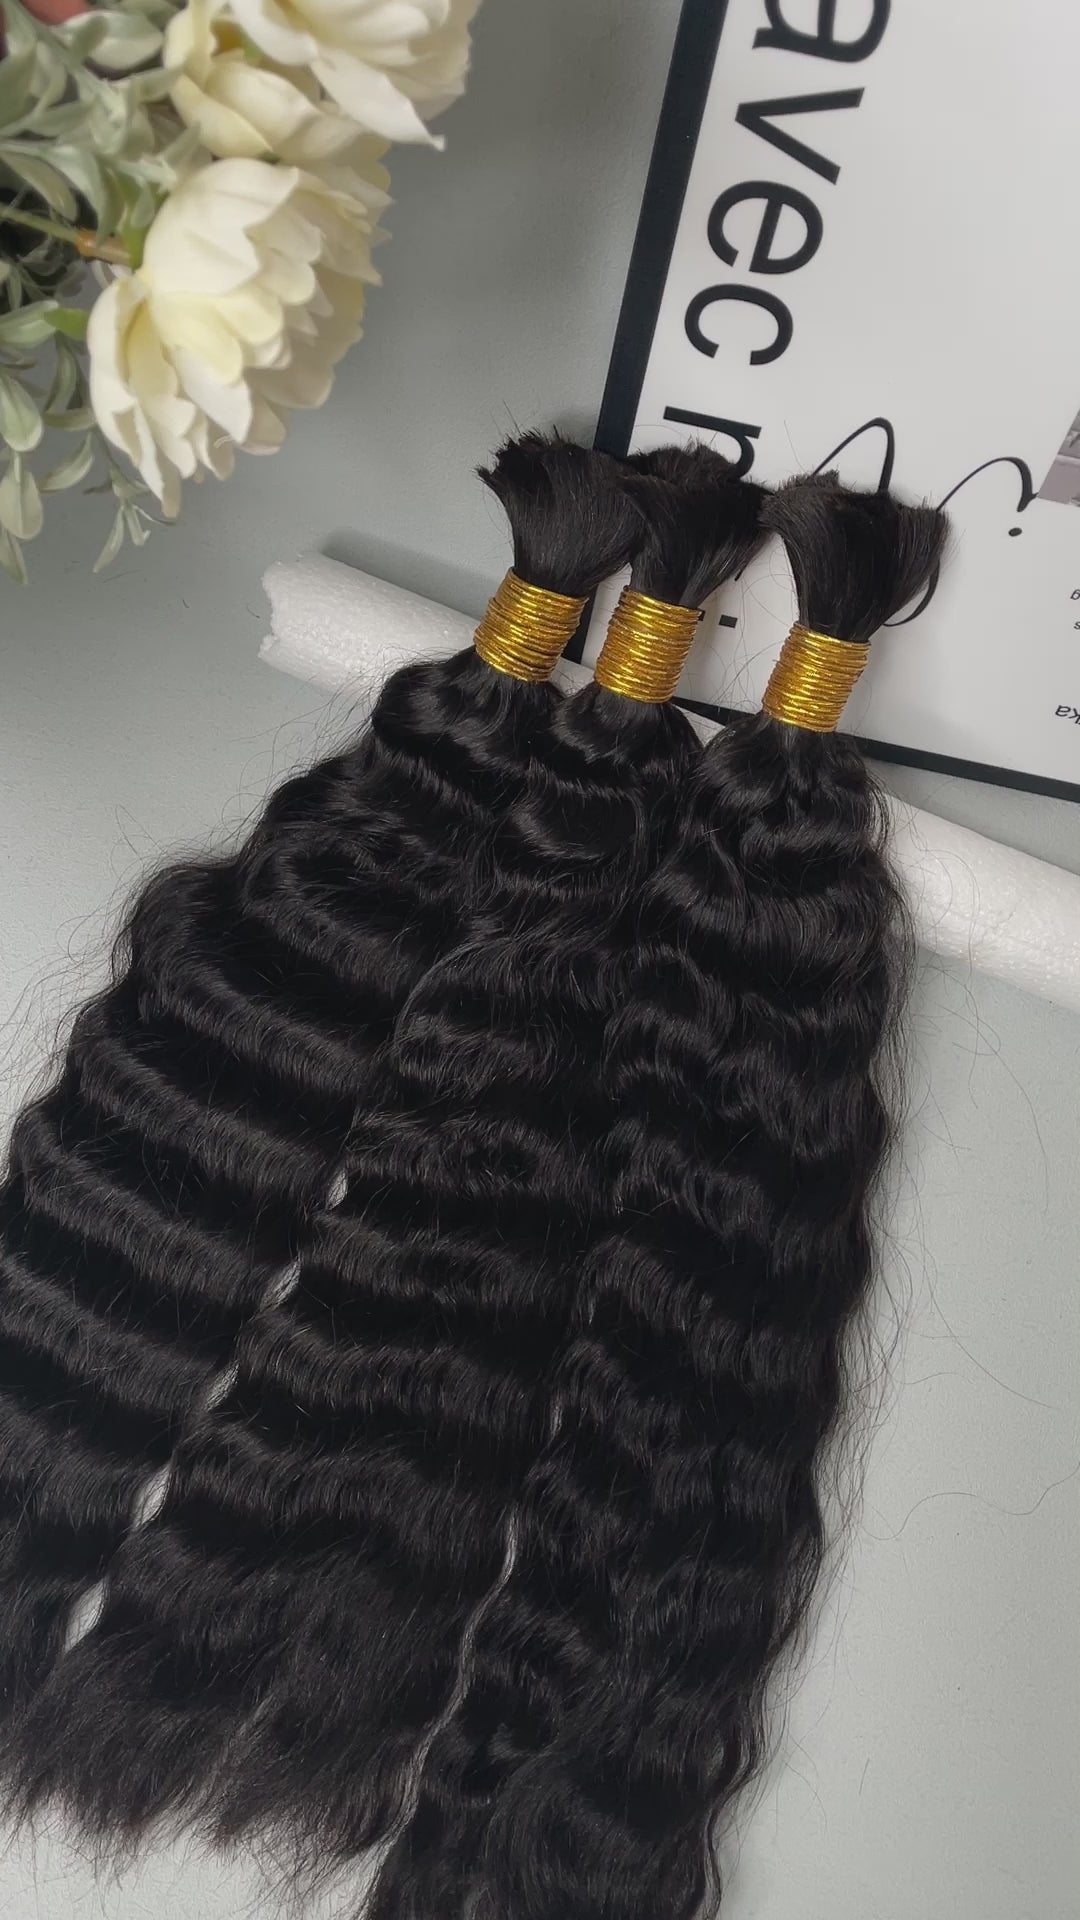 goddess knotless braids with human hair